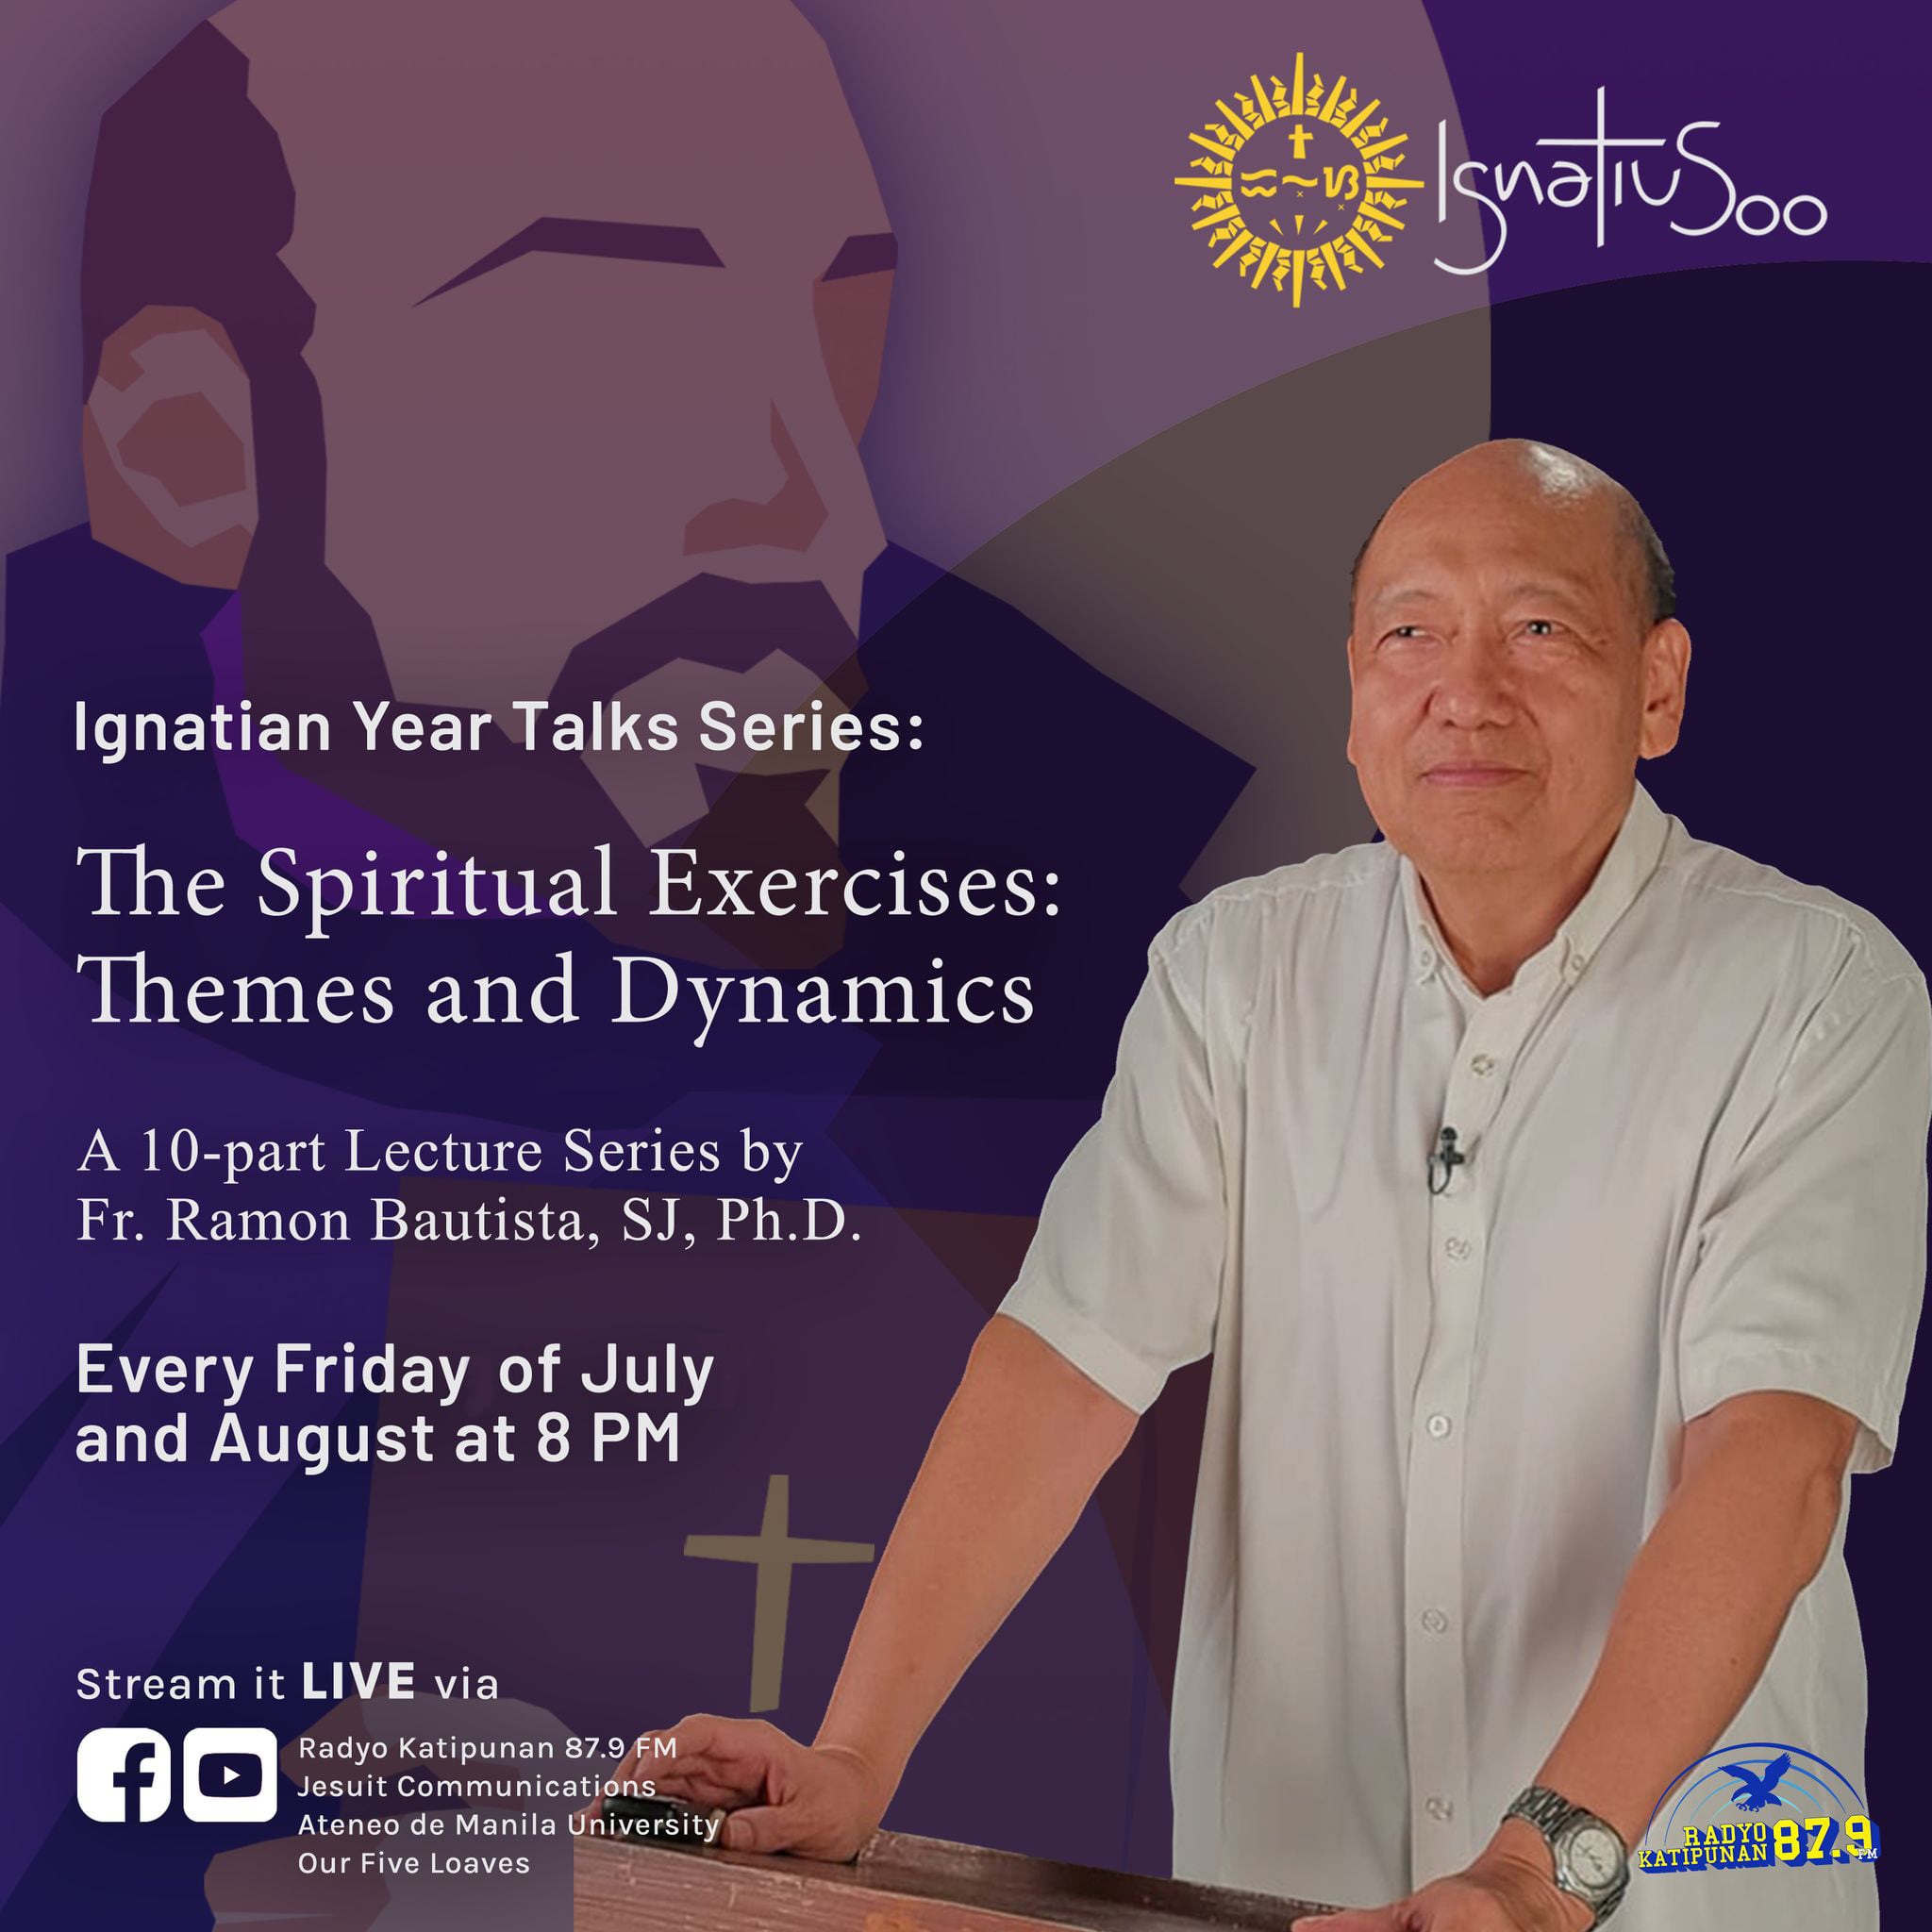 The Spiritual Exercises: Themes and Dynamics (Episode V) — ‘The Spiritual Exercises as a School of Prayer’ with Fr. Ramon Bautista, SJ